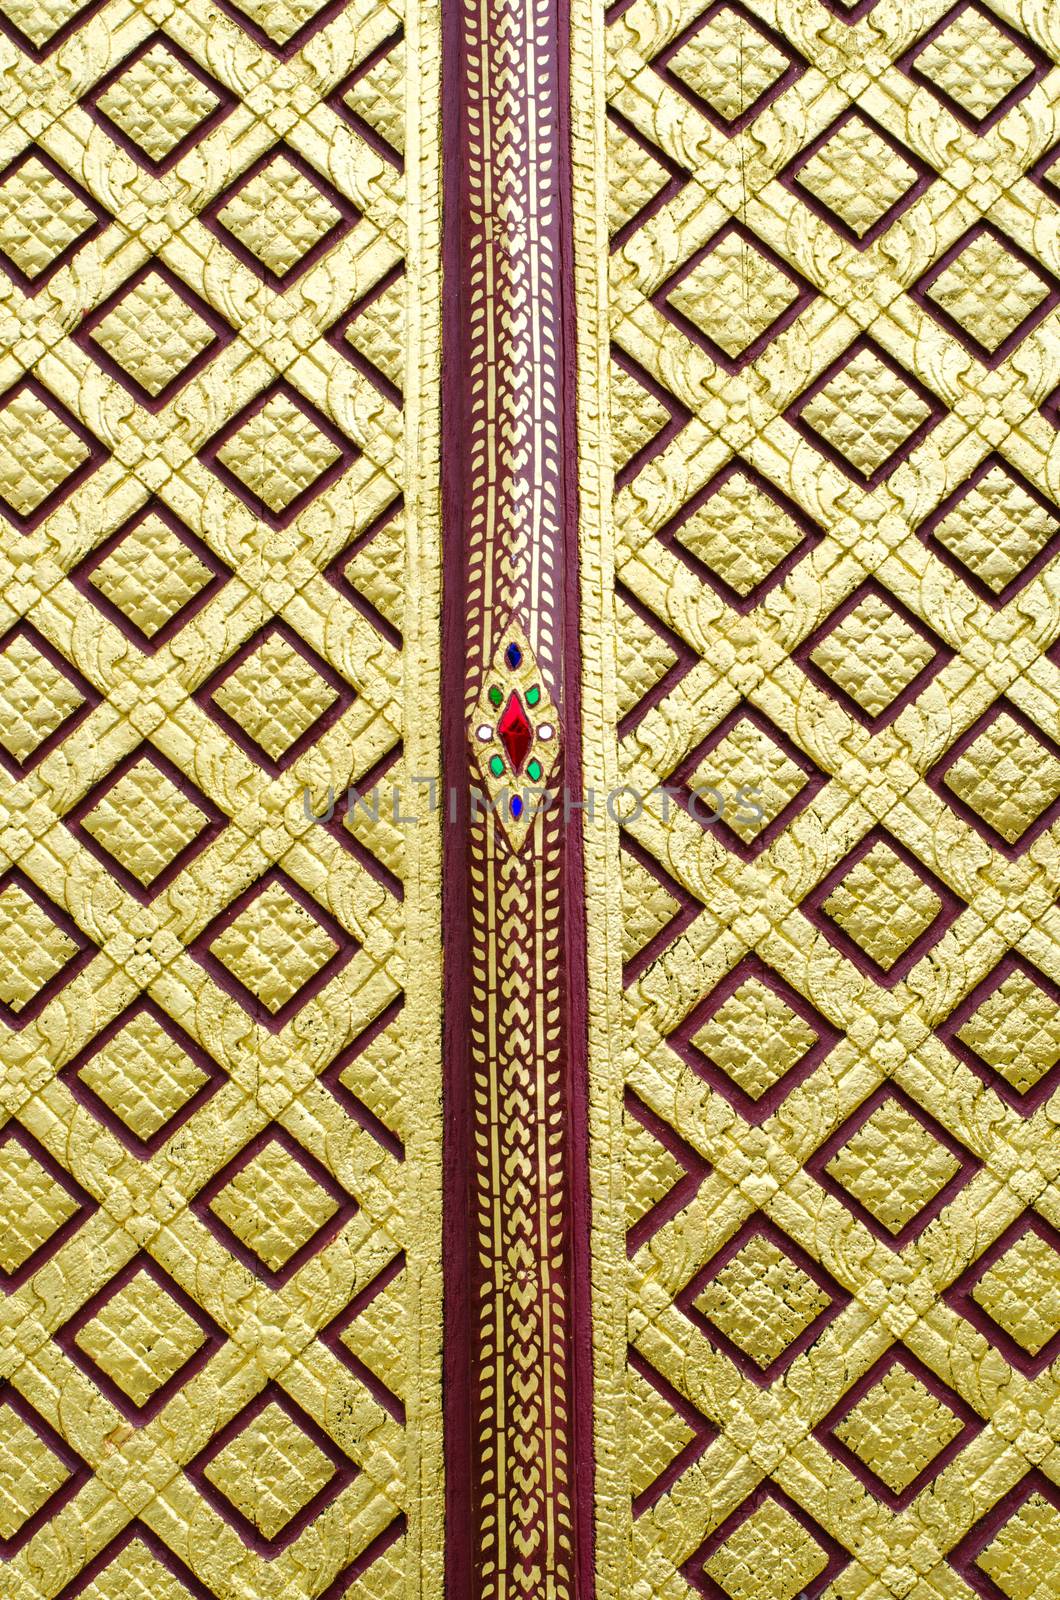 Thai pattern on door in Thailand Buddha Temple Asian style art by photobyphotoboy